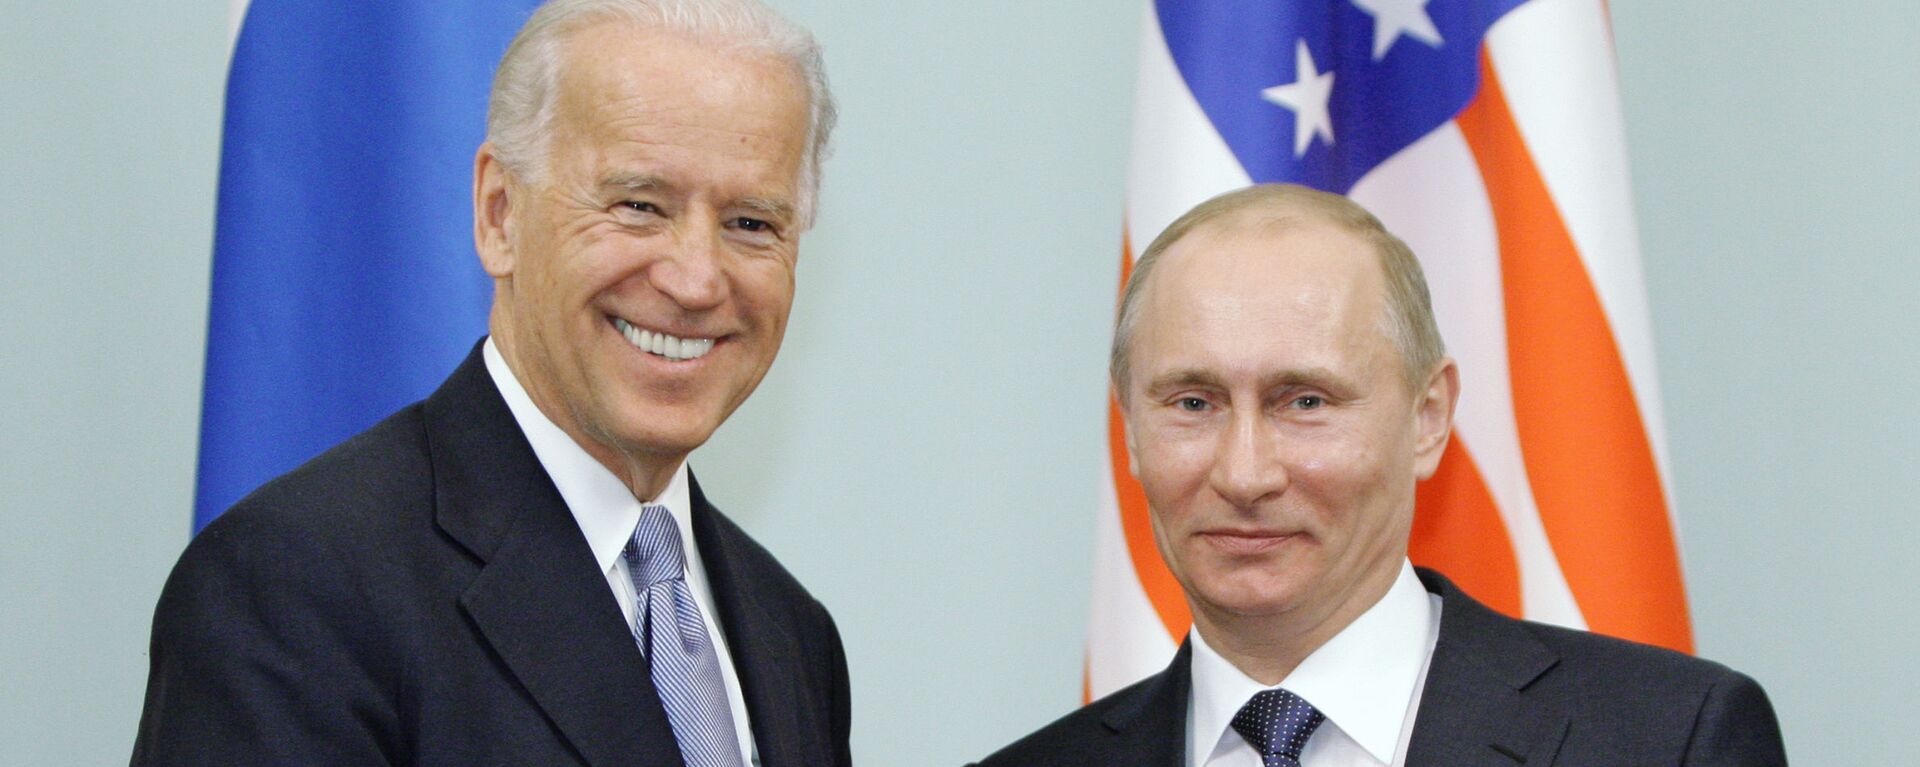 Joe Biden y Vladímir Putin en Rusia (archivo, año 2011) - Sputnik Mundo, 1920, 10.11.2020